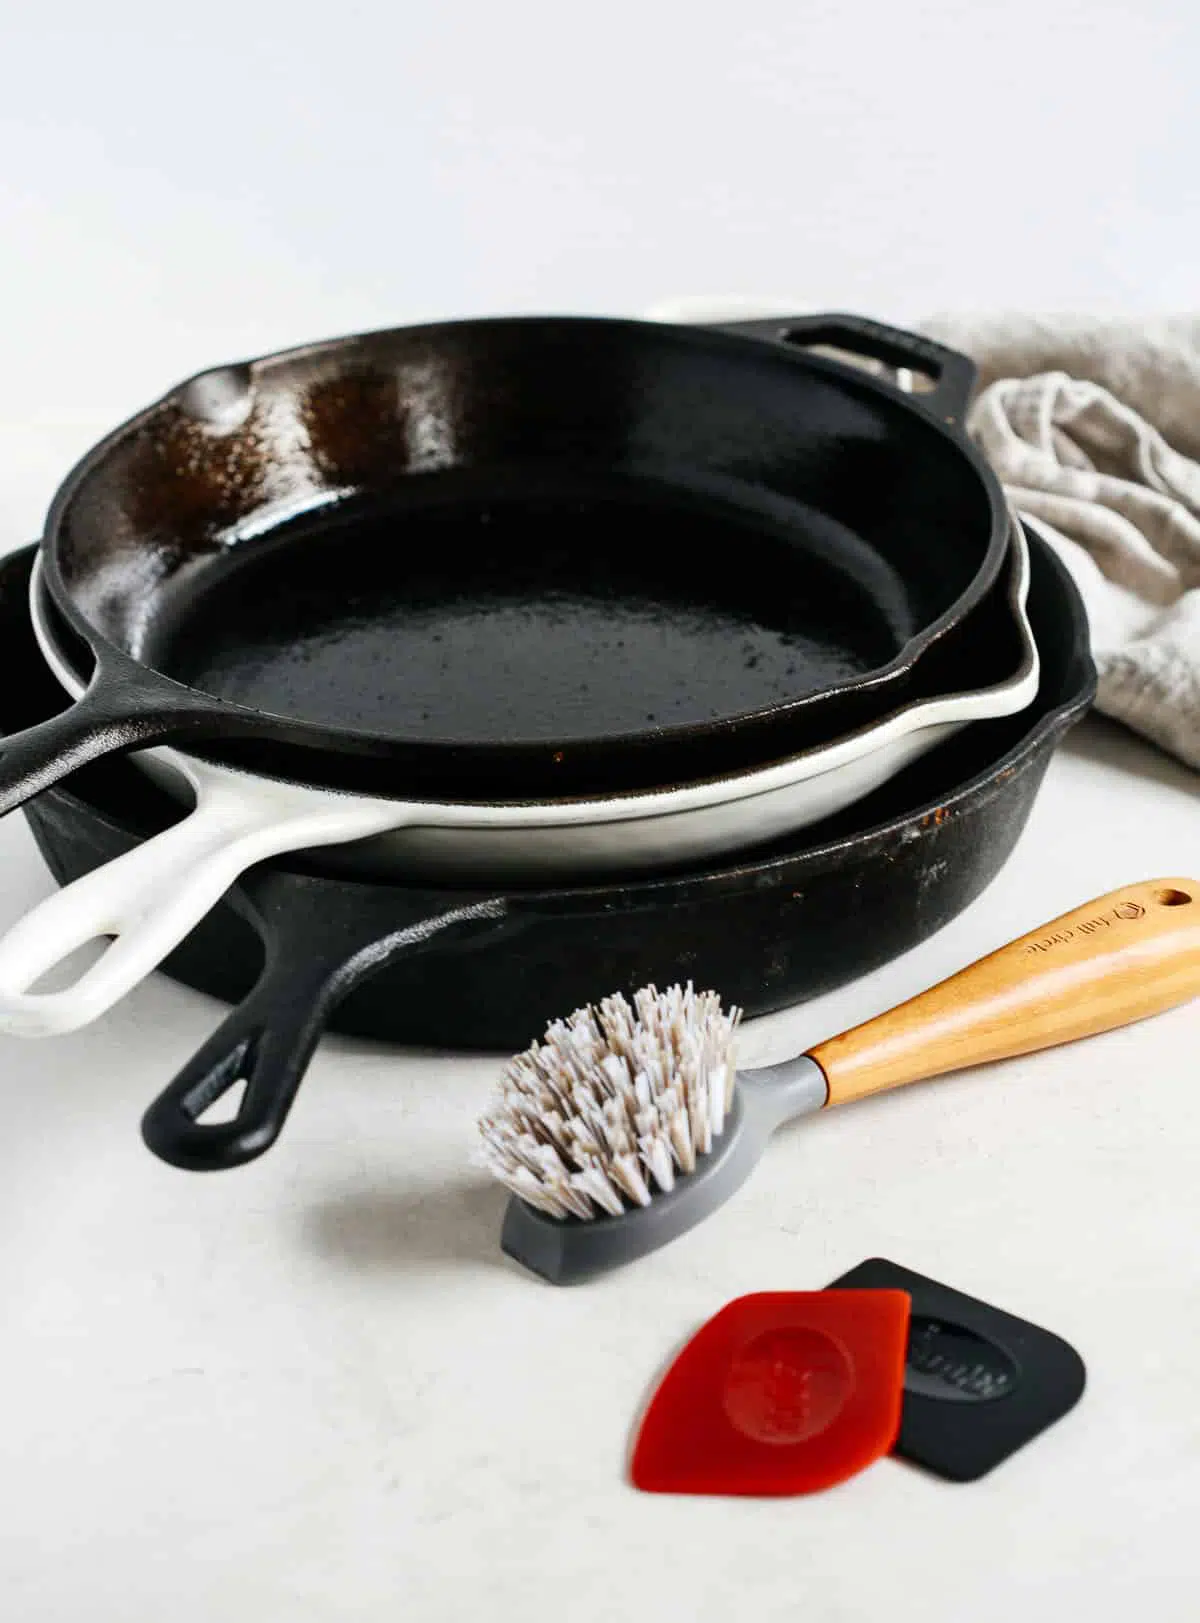 https://www.primaverakitchen.com/wp-content/uploads/2020/02/How-to-clean-a-cast-iron-skillet-Primavera-Kitchen-3.jpg.webp